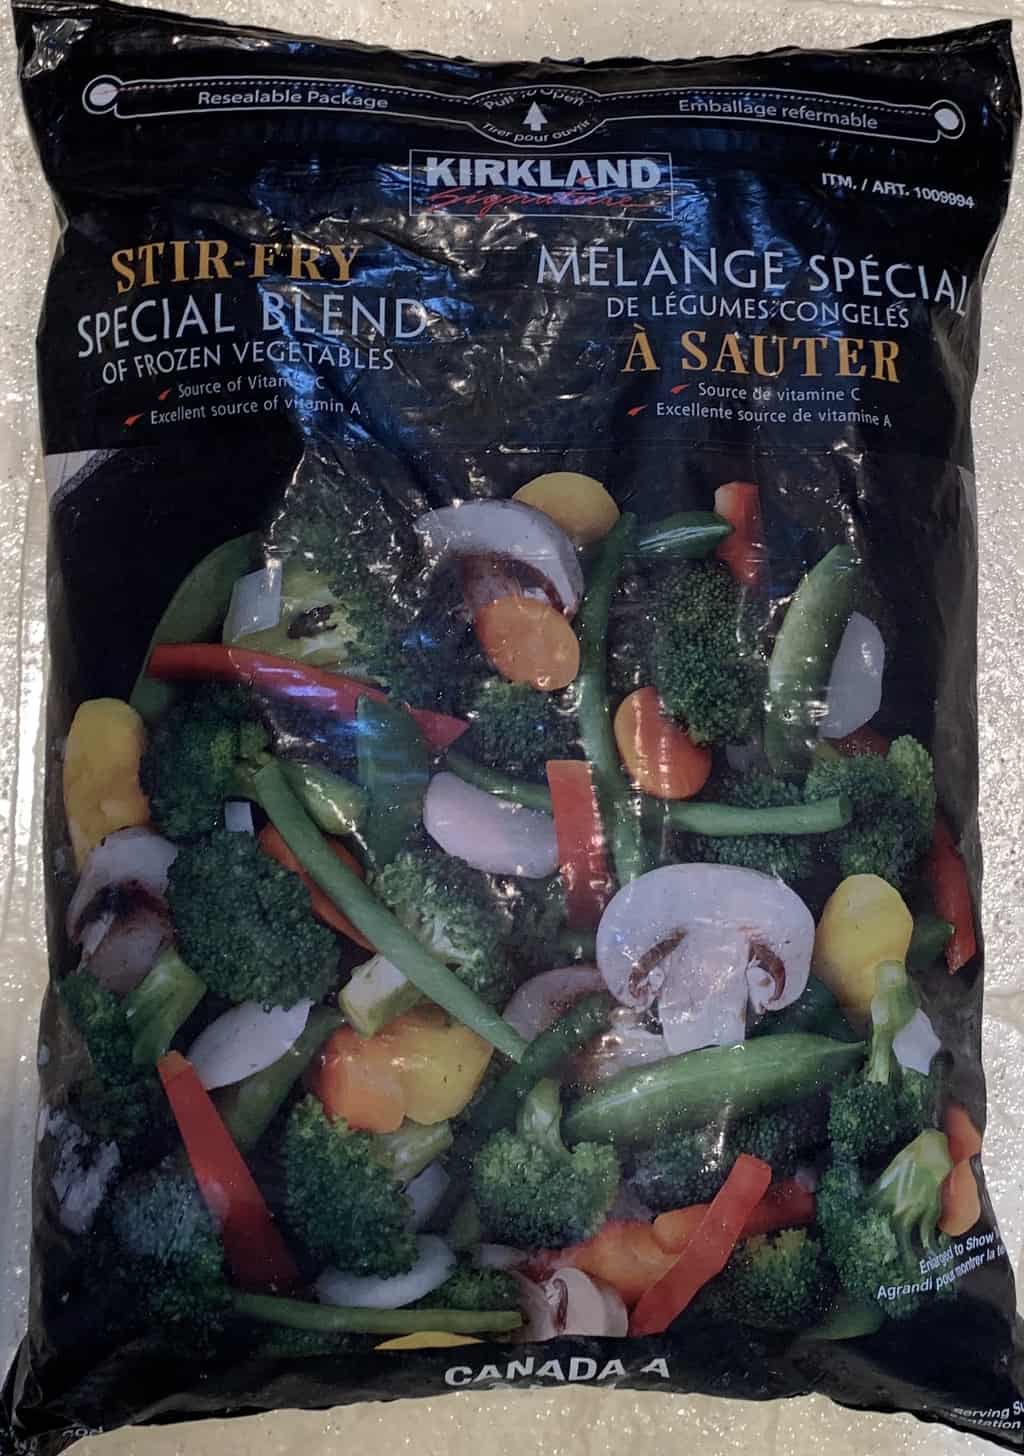 frozen-stir-fry-vegetables-kirkland-scefarmstore-lupon-gov-ph